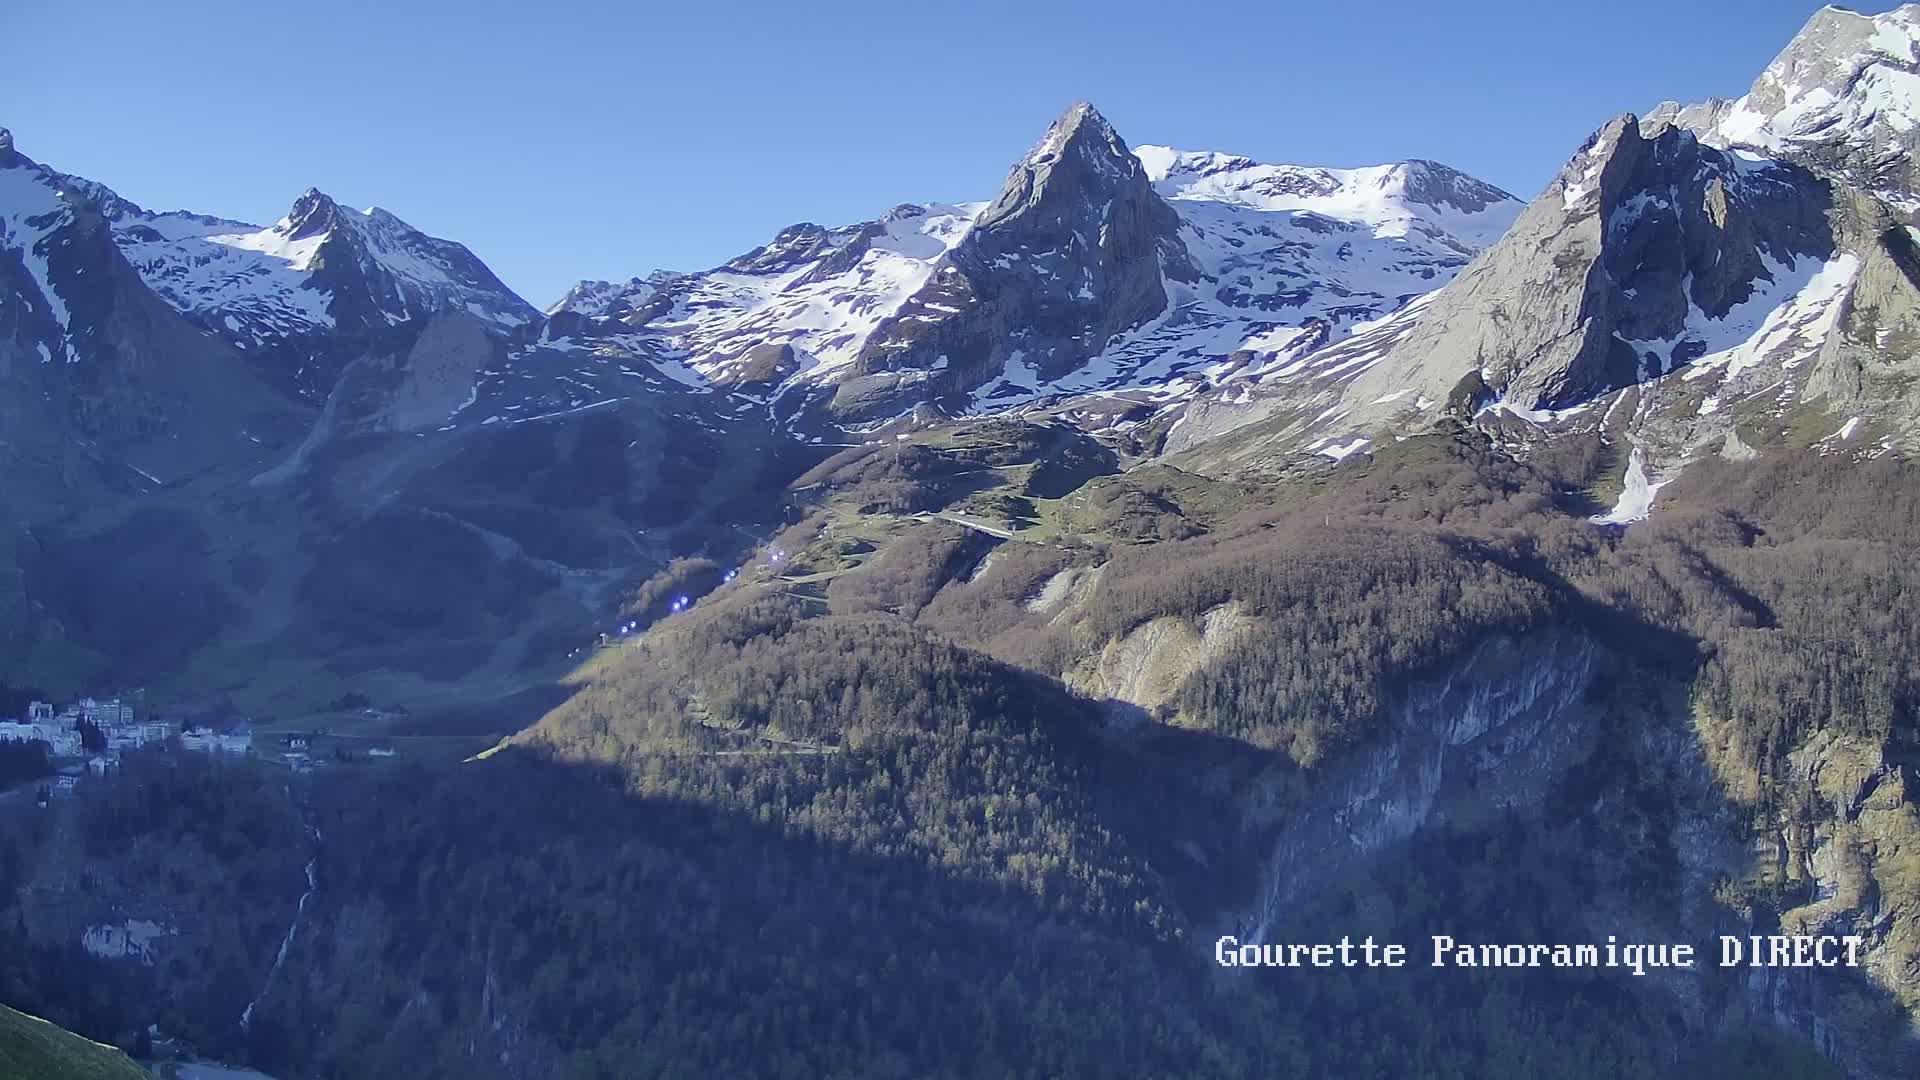 Webcam en Cirque de Gourette - Panoramique